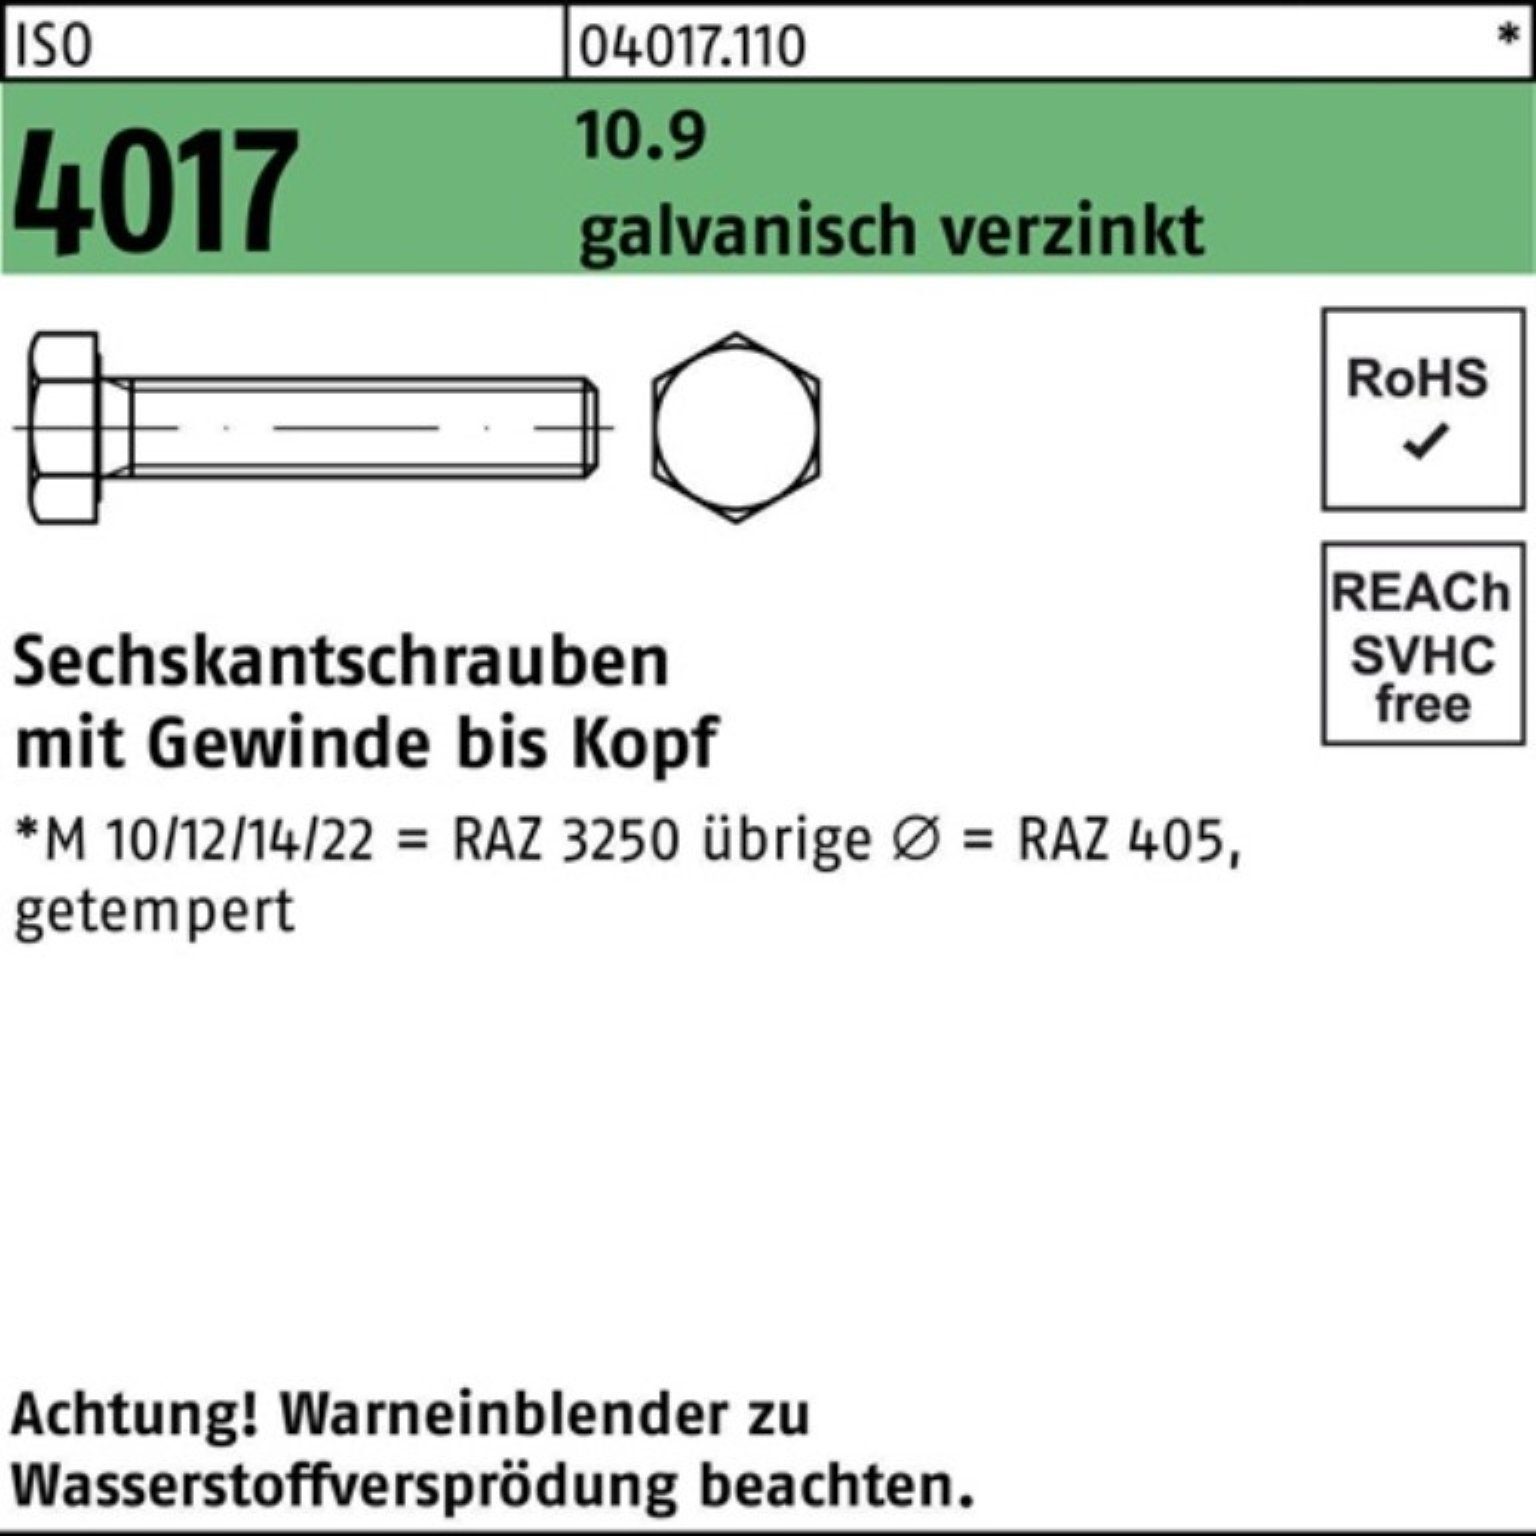 Bufab Sechskantschraube 200er 10.9 200 Sechskantschraube galv.verz. 20 Pack 4017 M10x VG ISO S